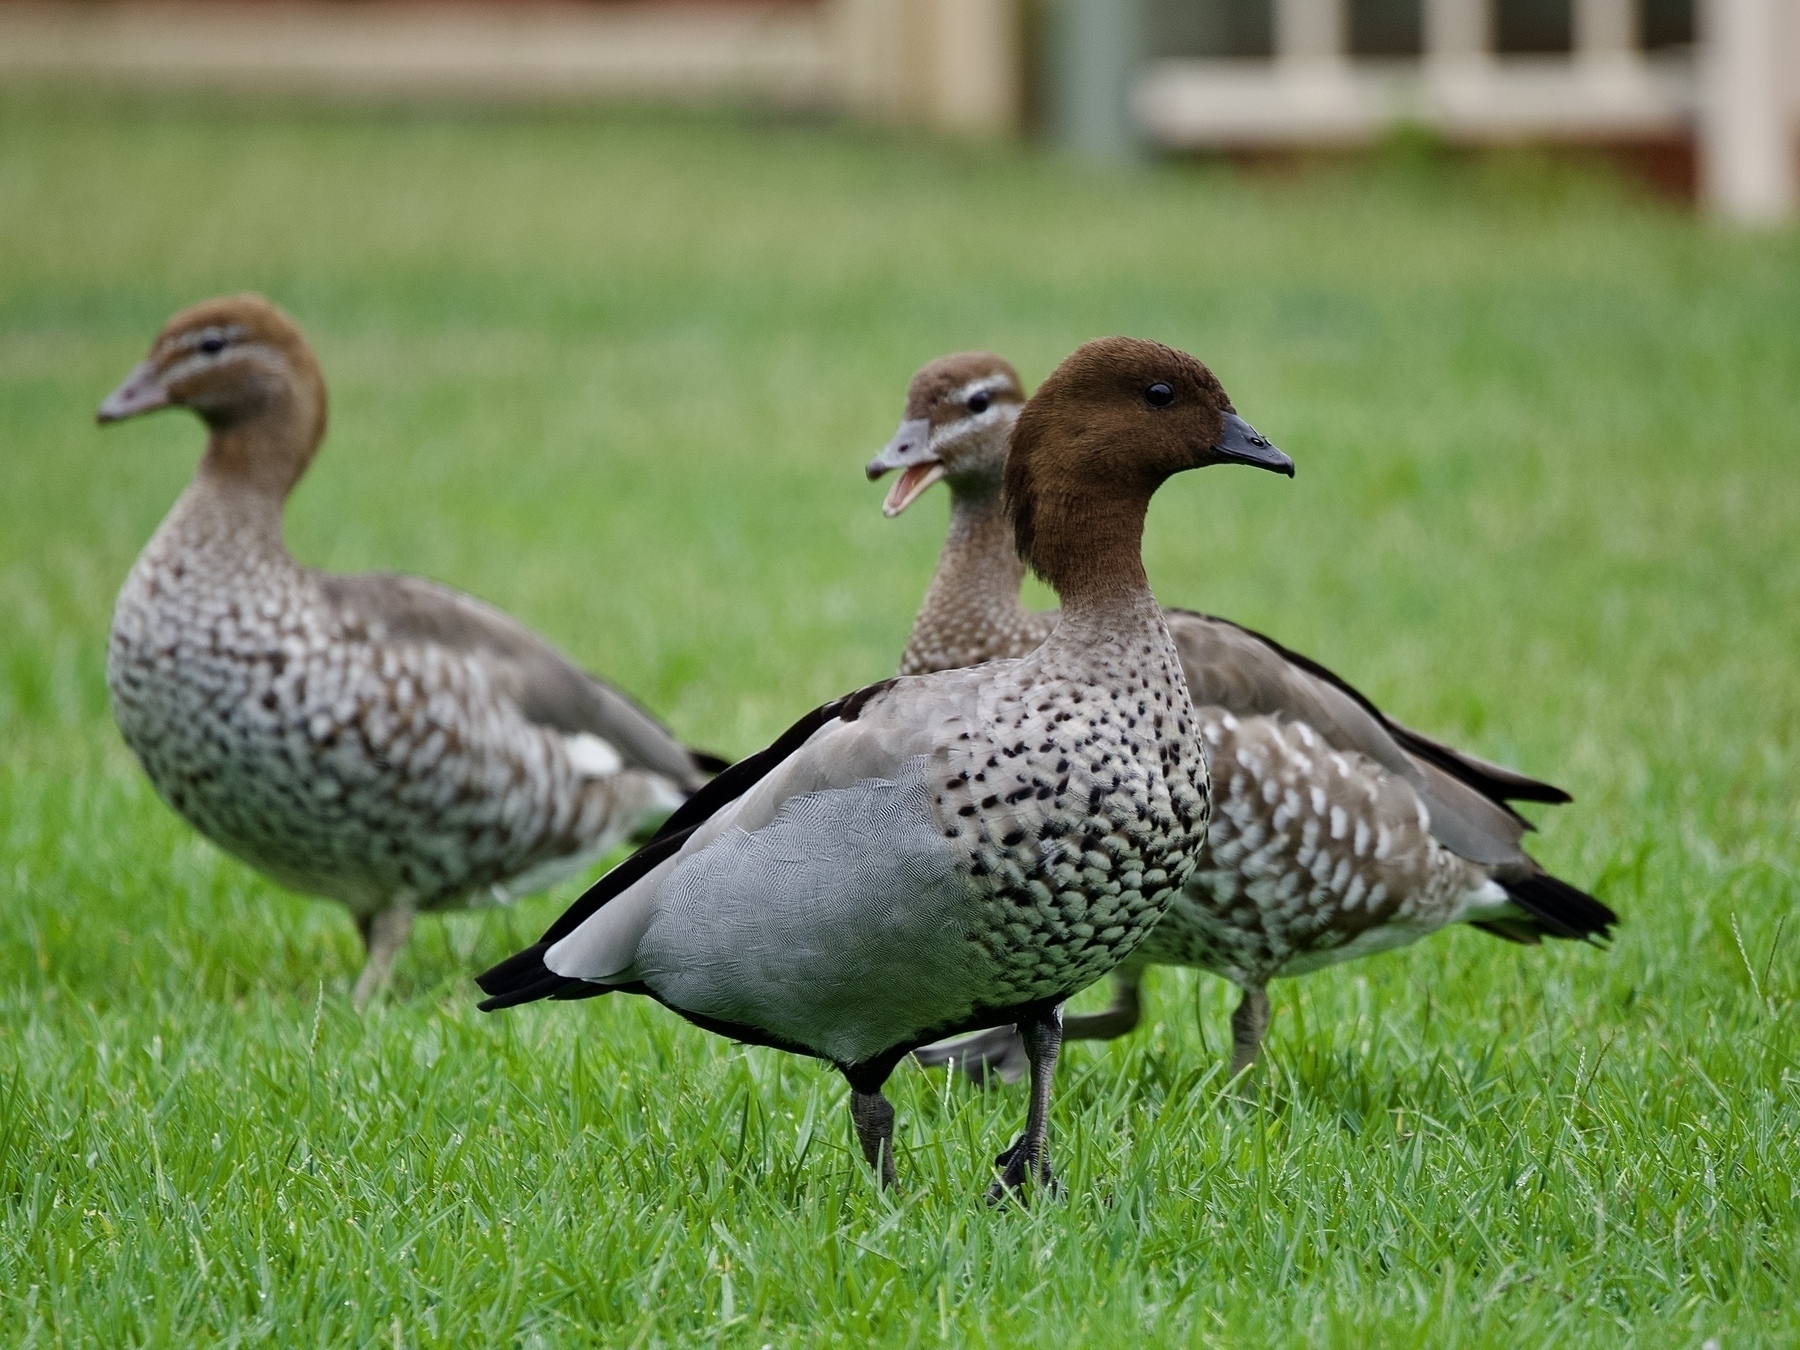 Three ducks on a lawn